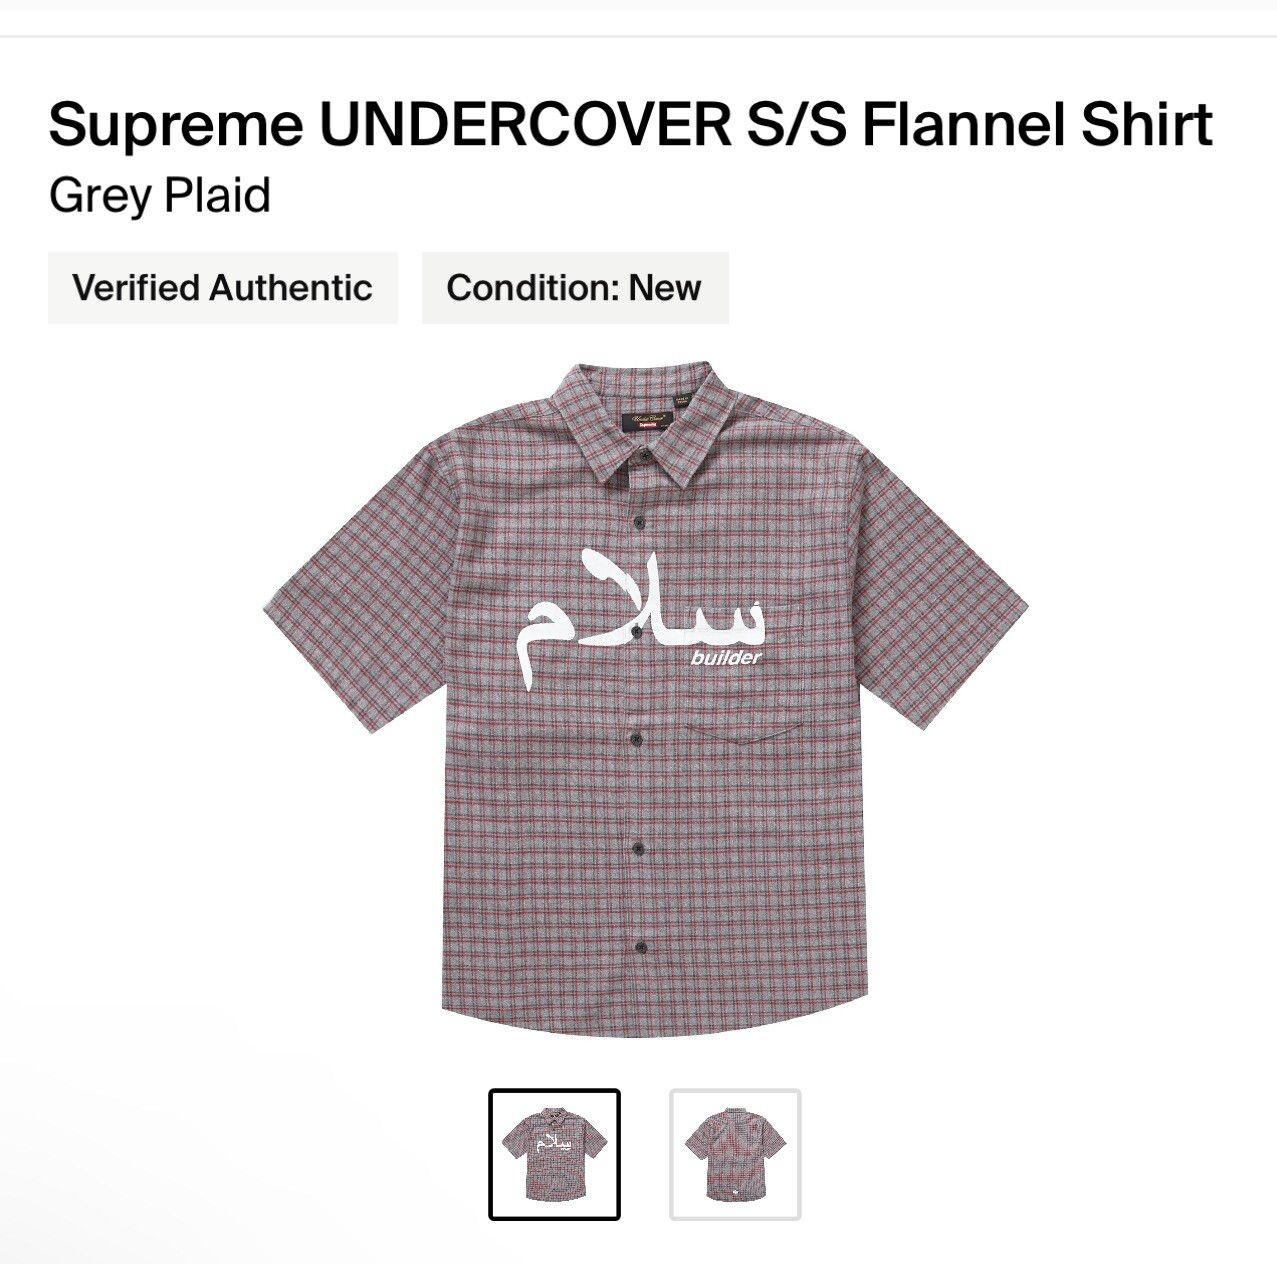 Supreme Supreme UNDERCOVER S/S Flannel Shirt Grey Plaid | Grailed